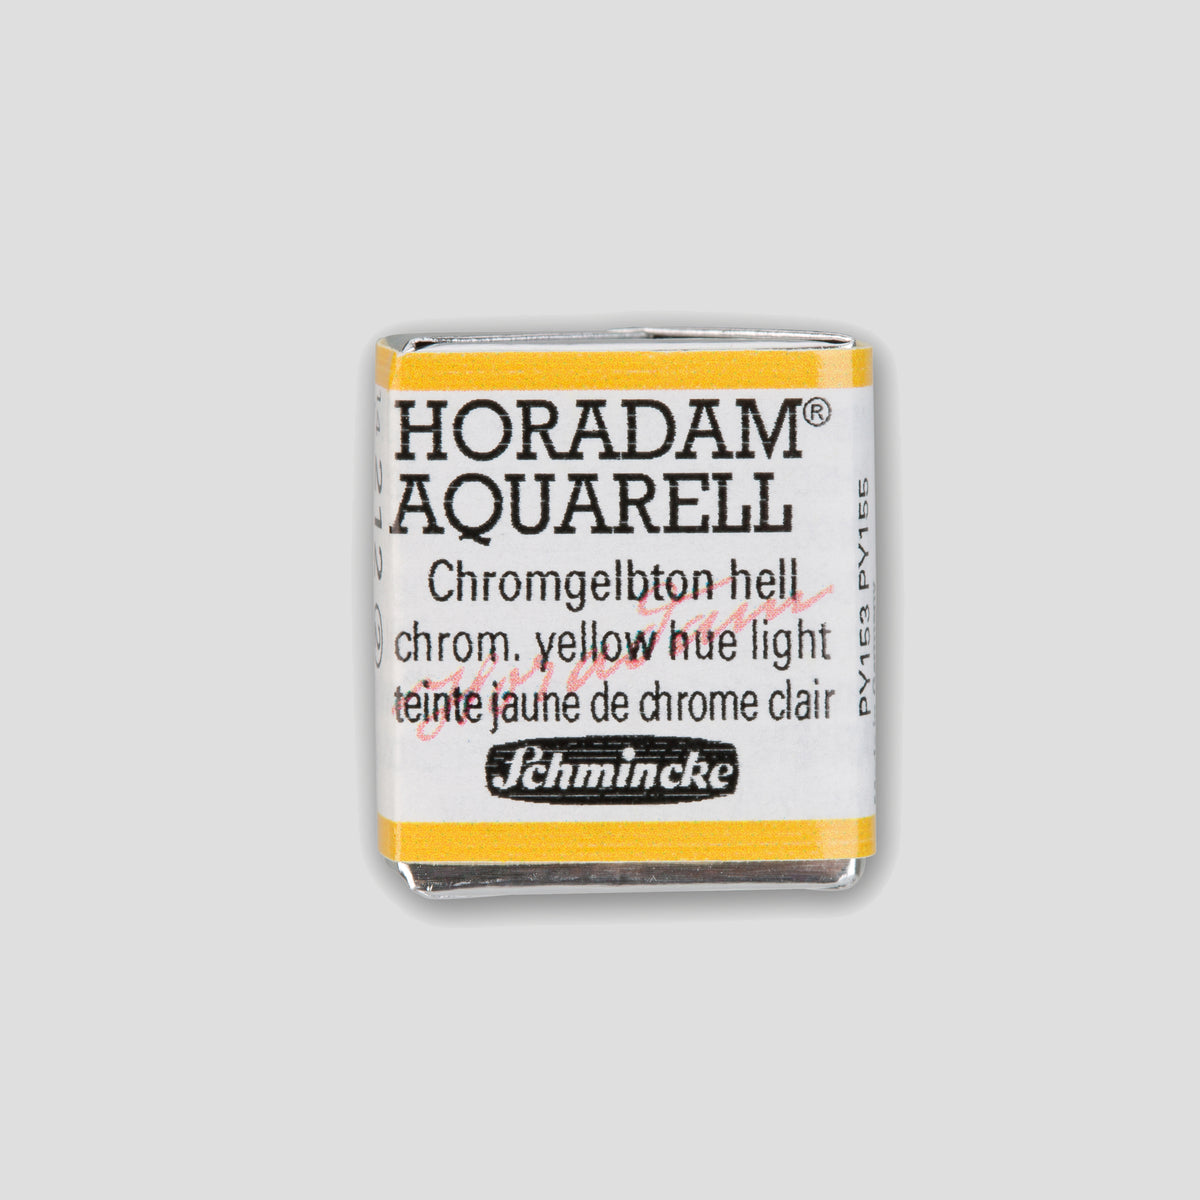 Schmincke Horadam® Half pan 212 Chromium yellow hue light 2